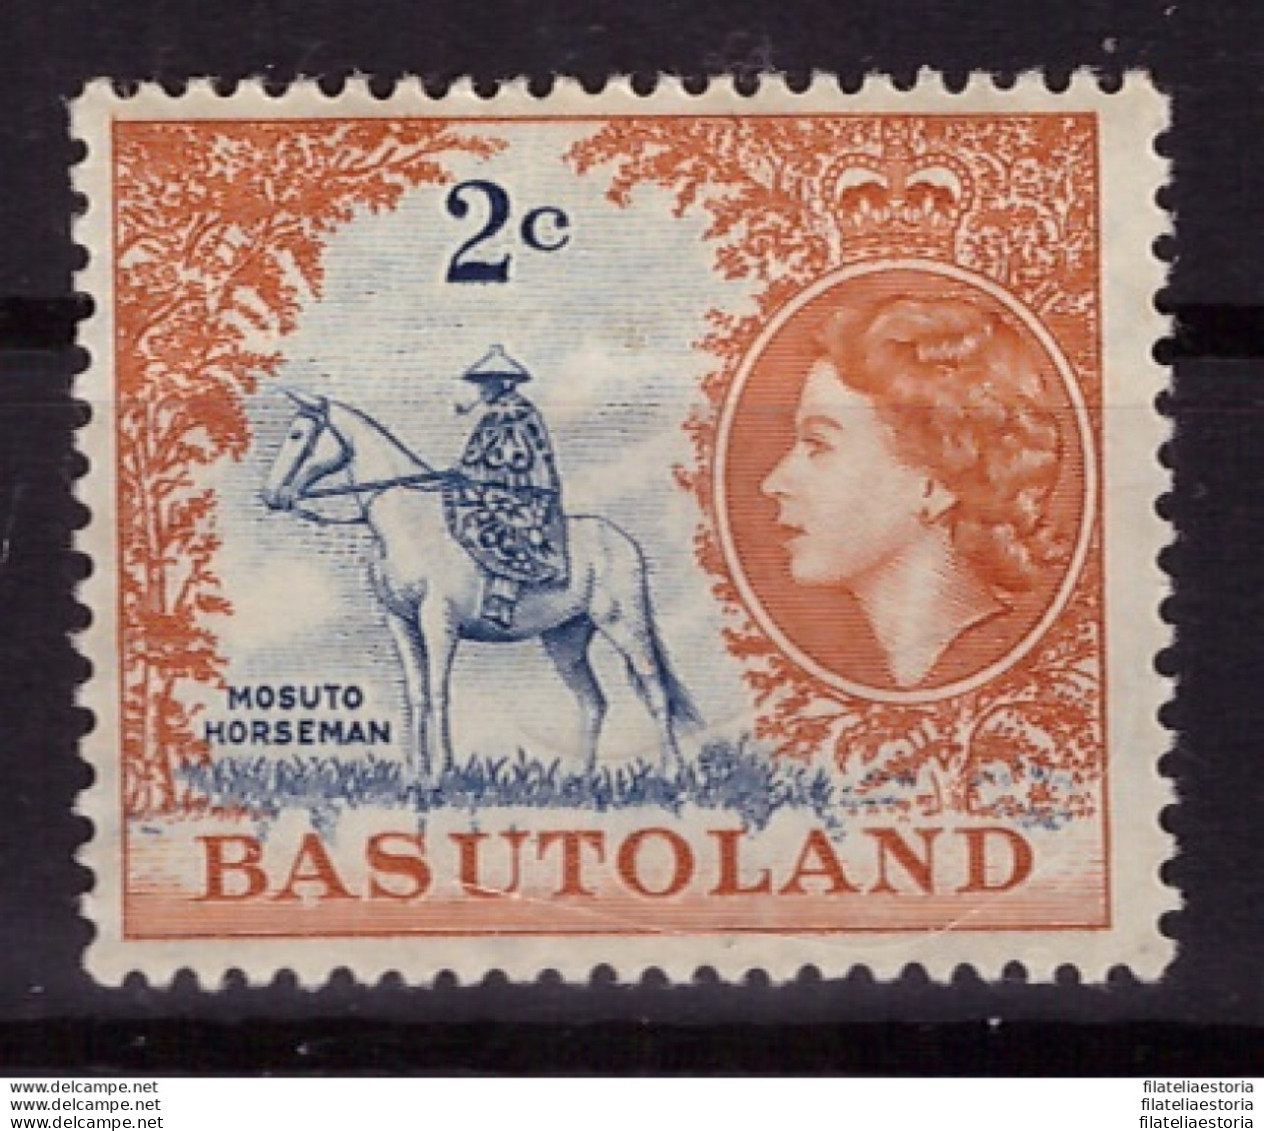 Basutoland 1962 - MH * - Reine Elizabeth II - Motifs Du Pays - Michel Nr. 74 (09-030) - 1933-1964 Colonie Britannique